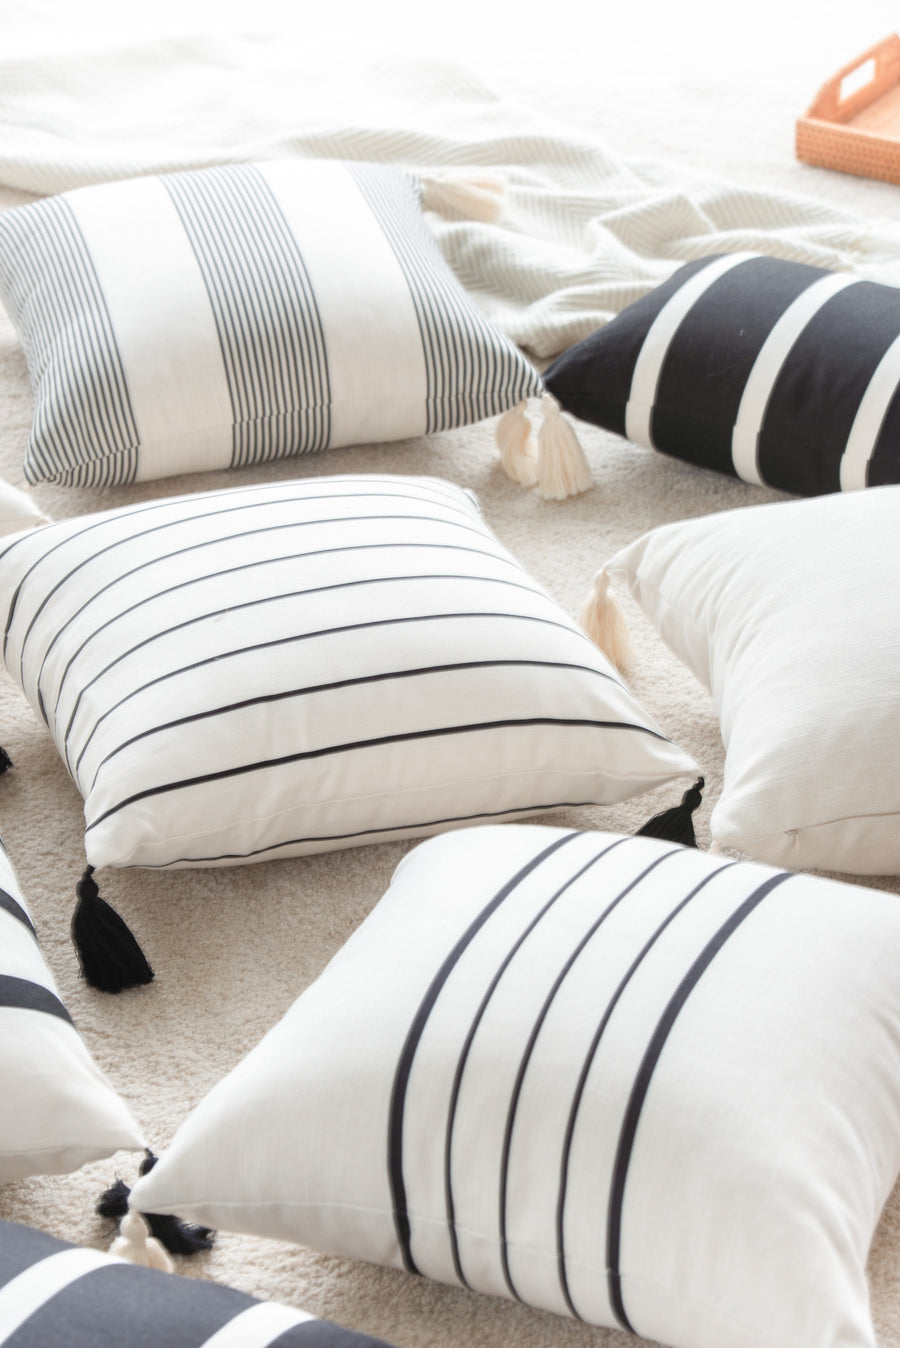 Moroccan Tassel Neutral Pillow Cover, Striped, Beige Black, 18